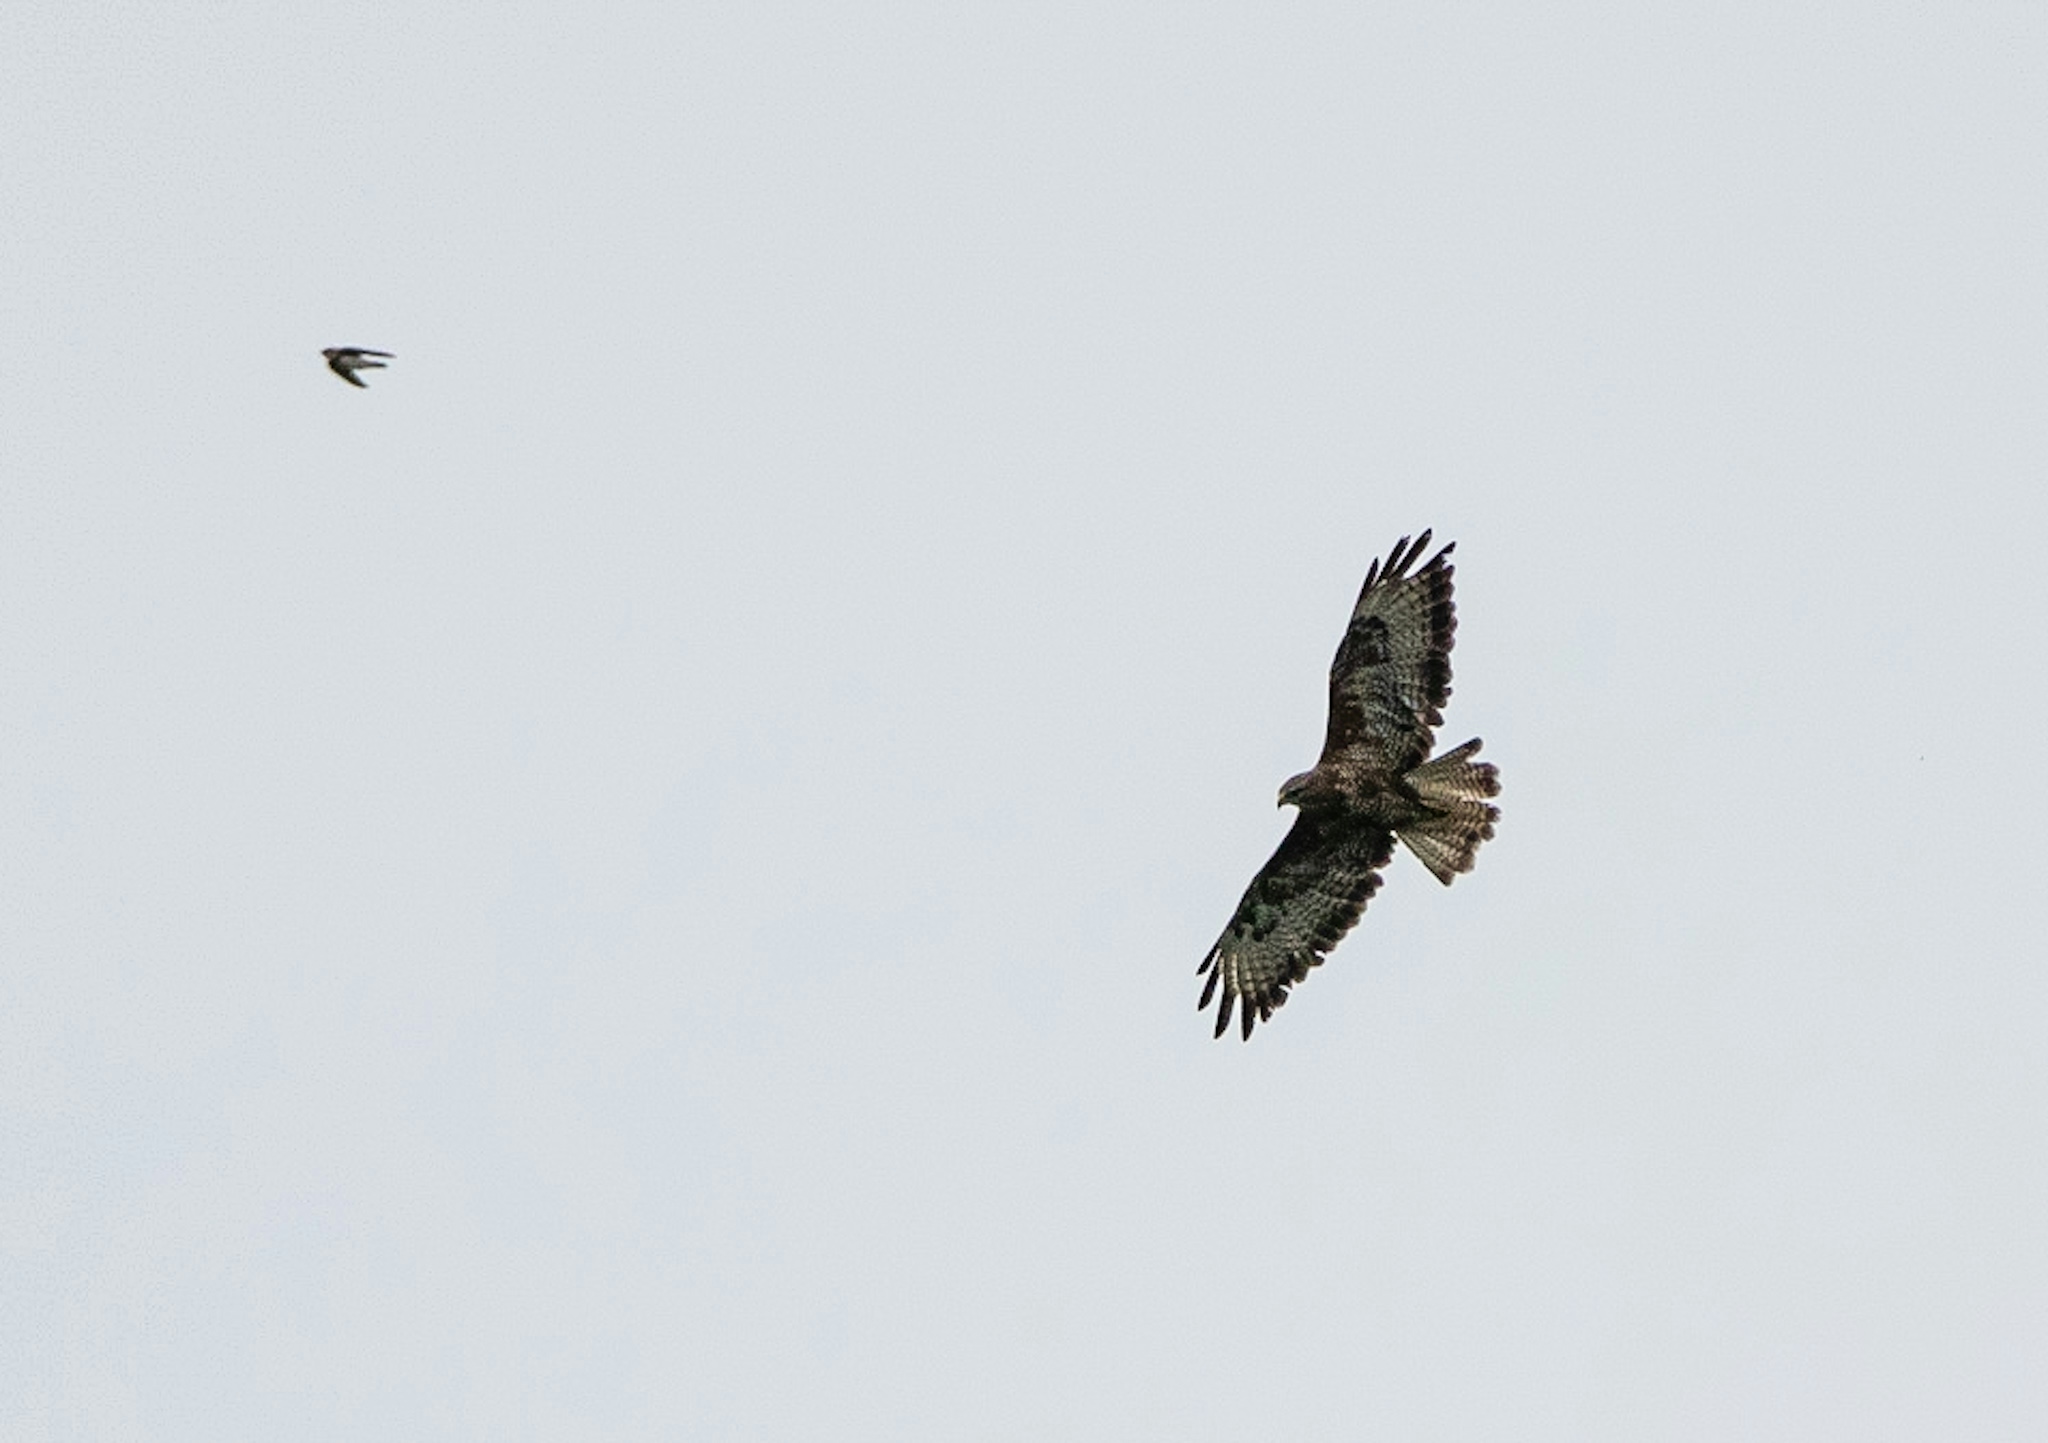 hayley-kinsey-common-buzzard-in-flight-